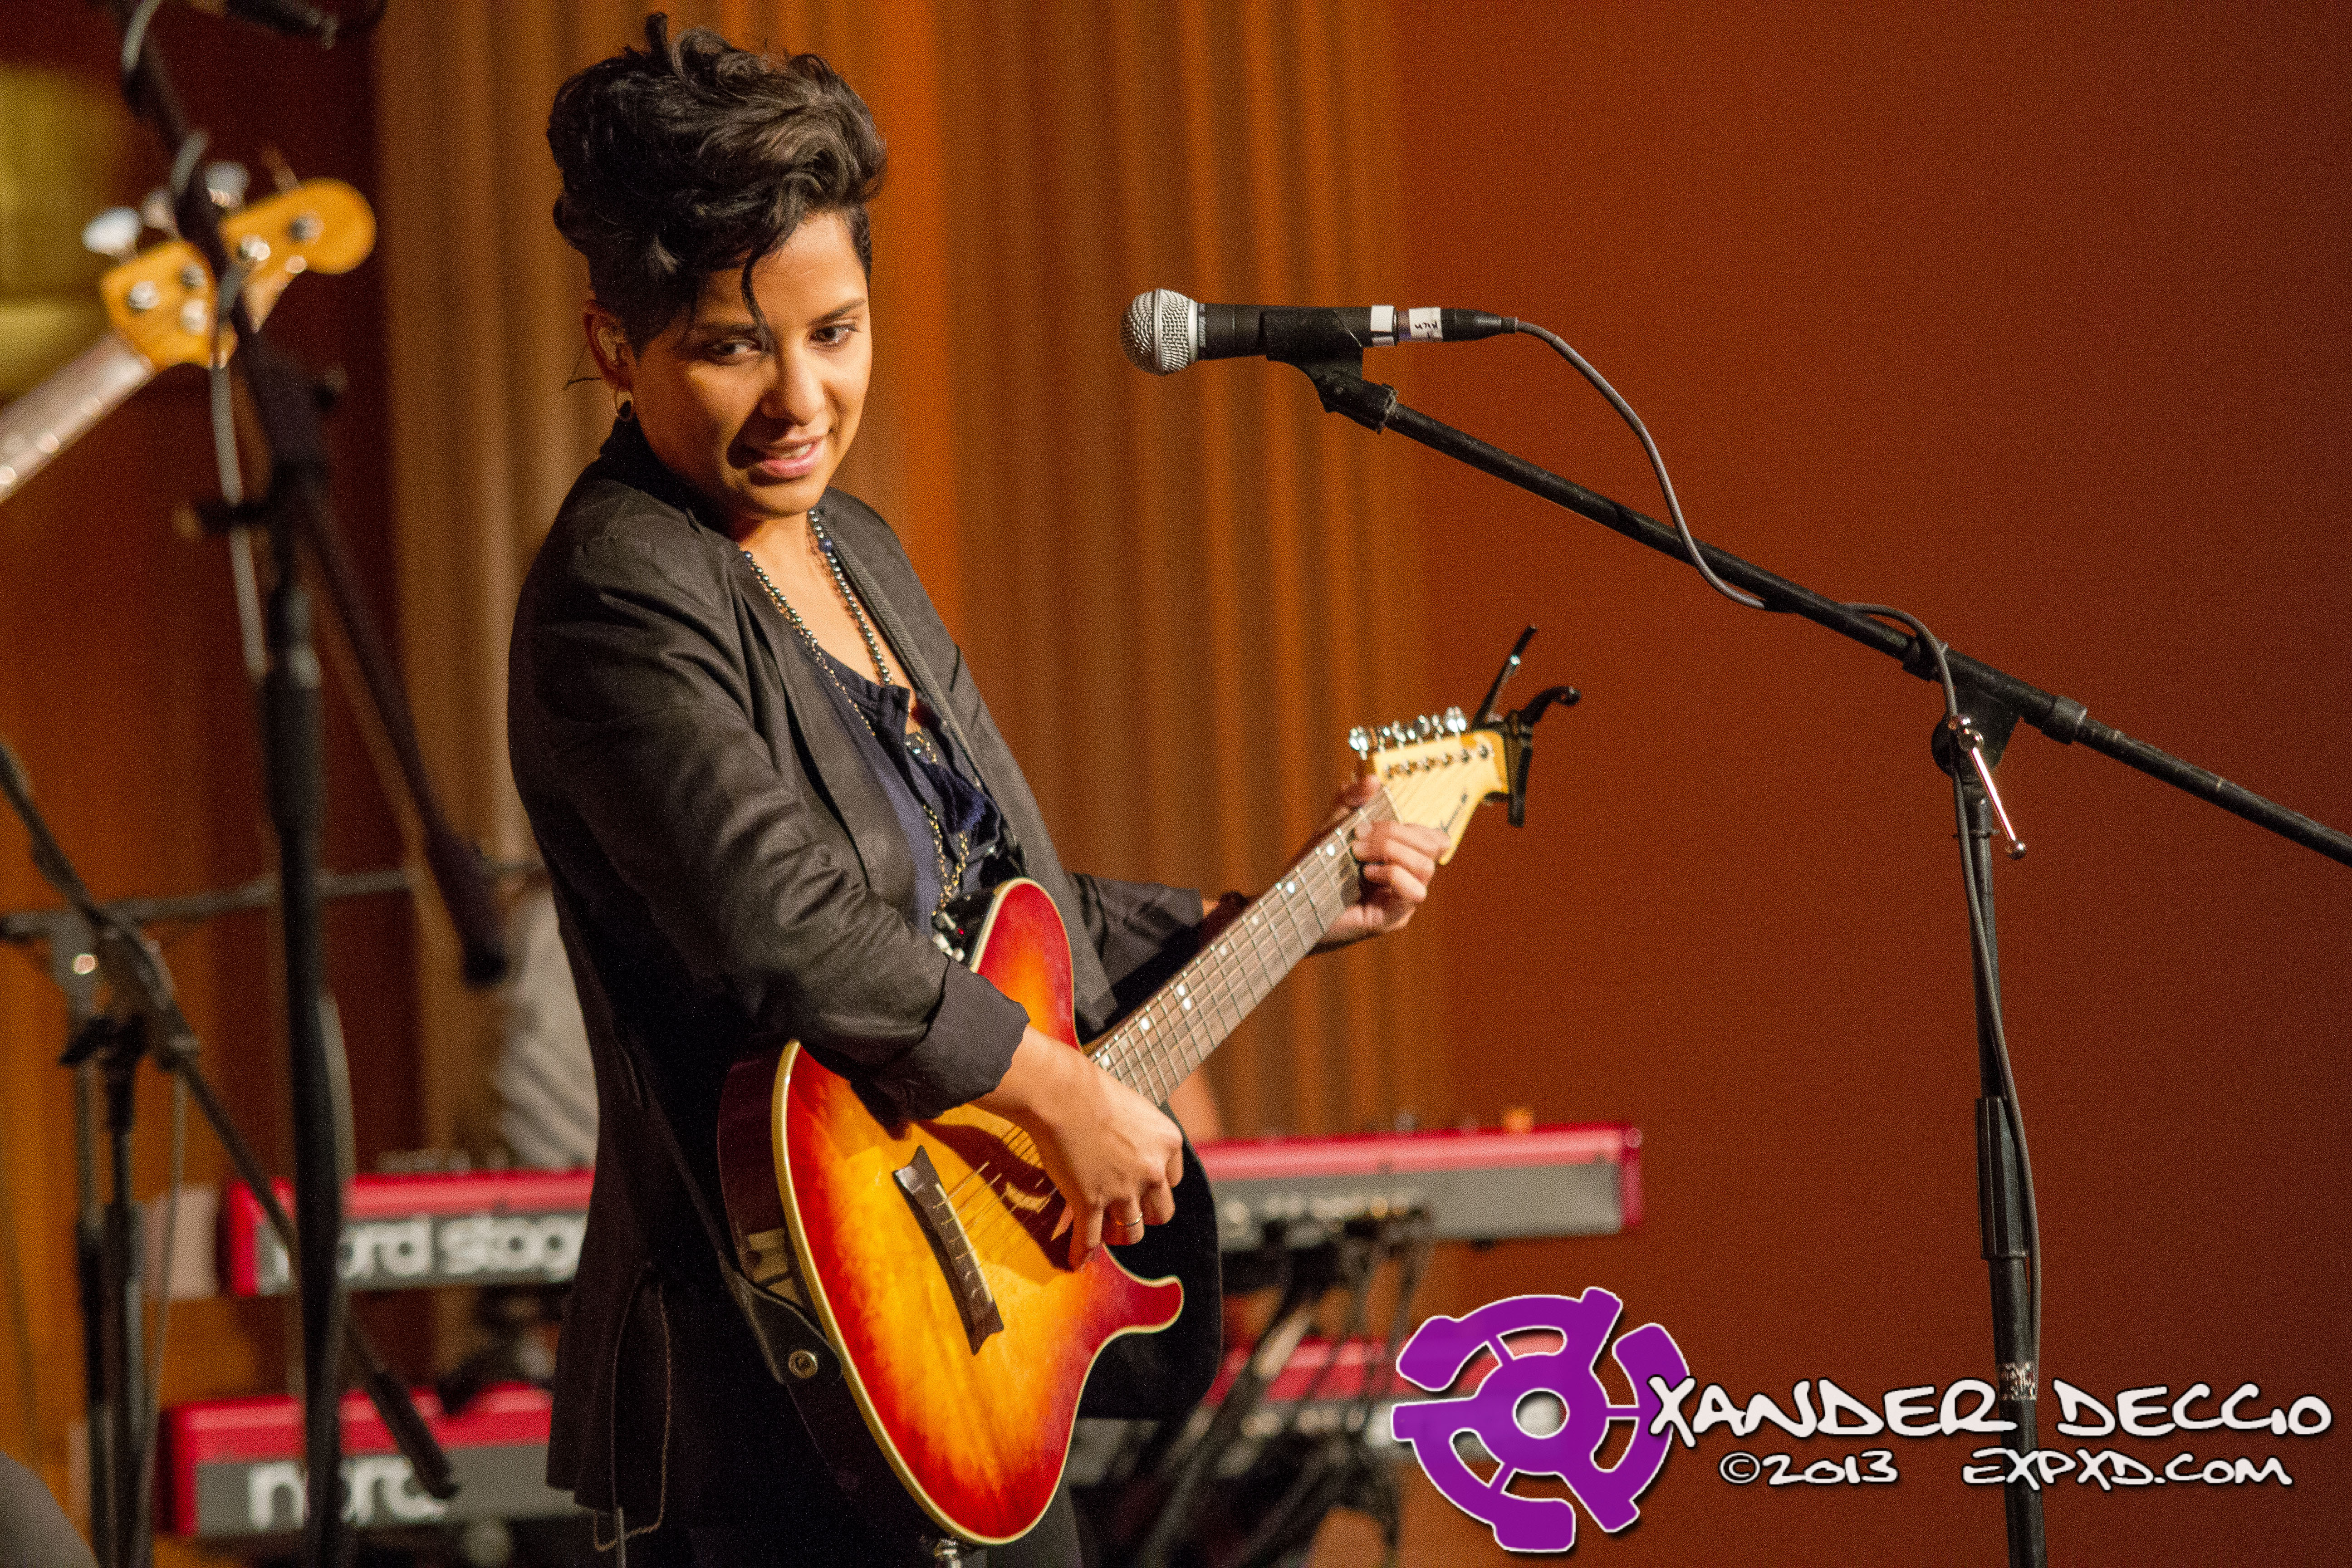 Vicci Martinez @ The Seasons Performance Hall (Photo By Xander Deccio)